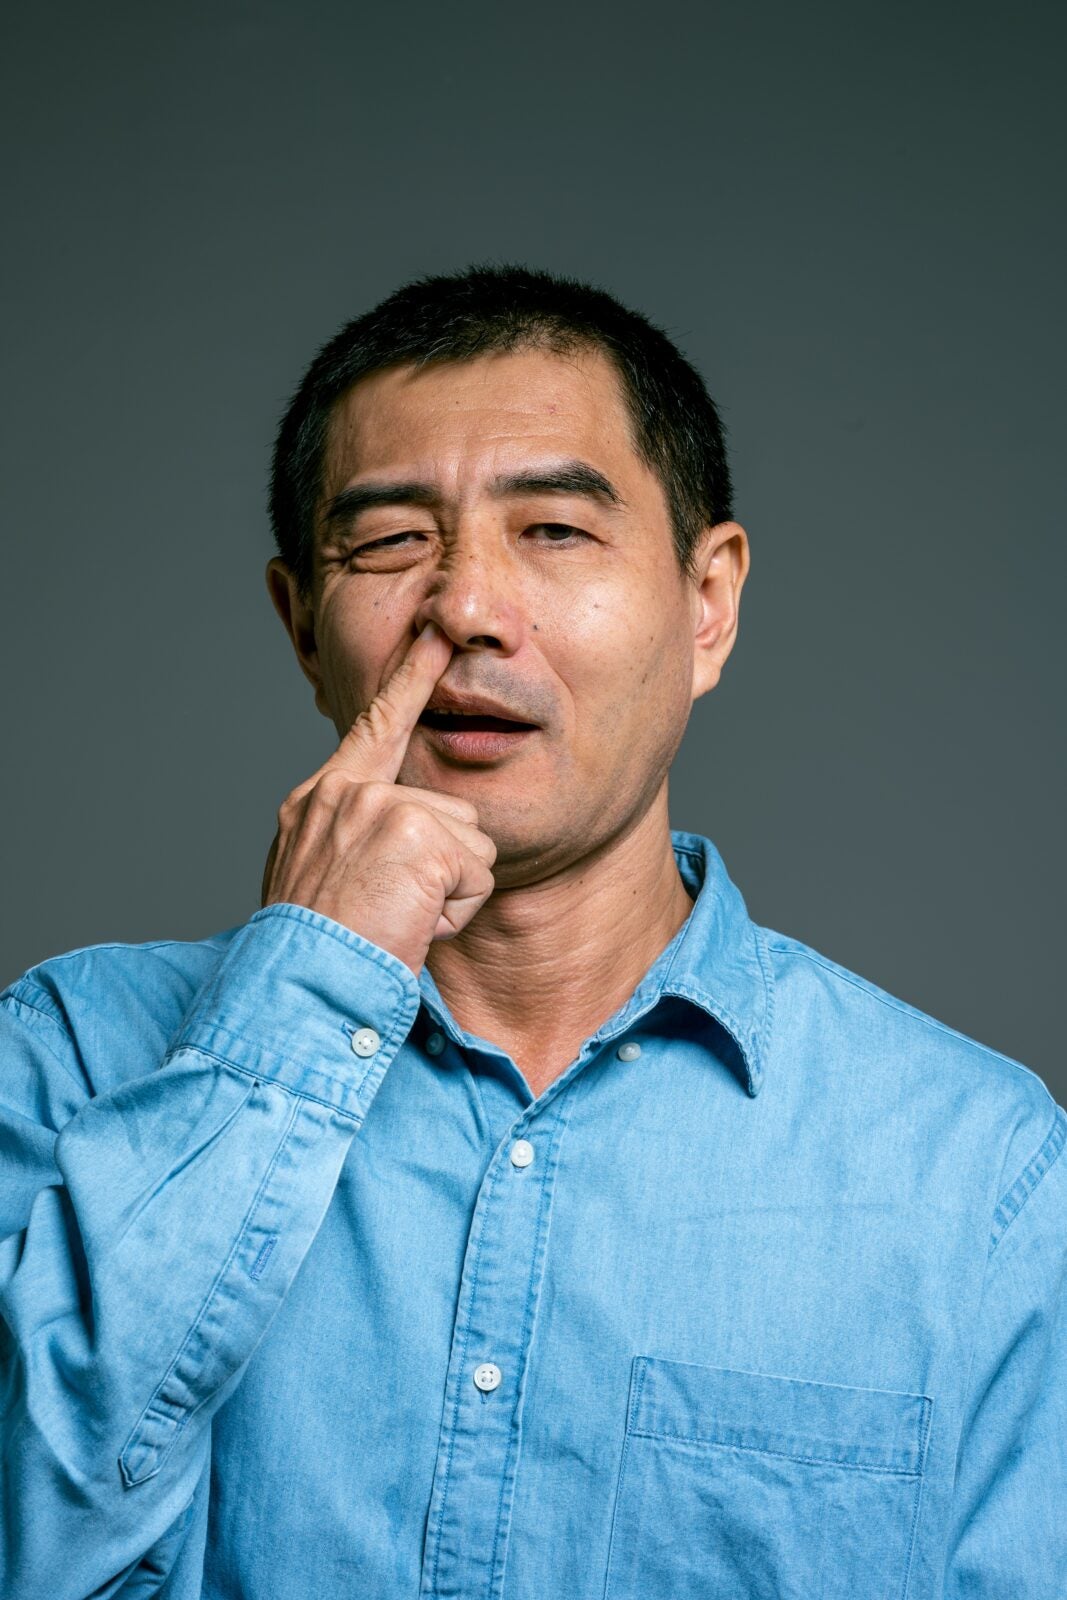 A man wearing a blue shirt digging his nose. 